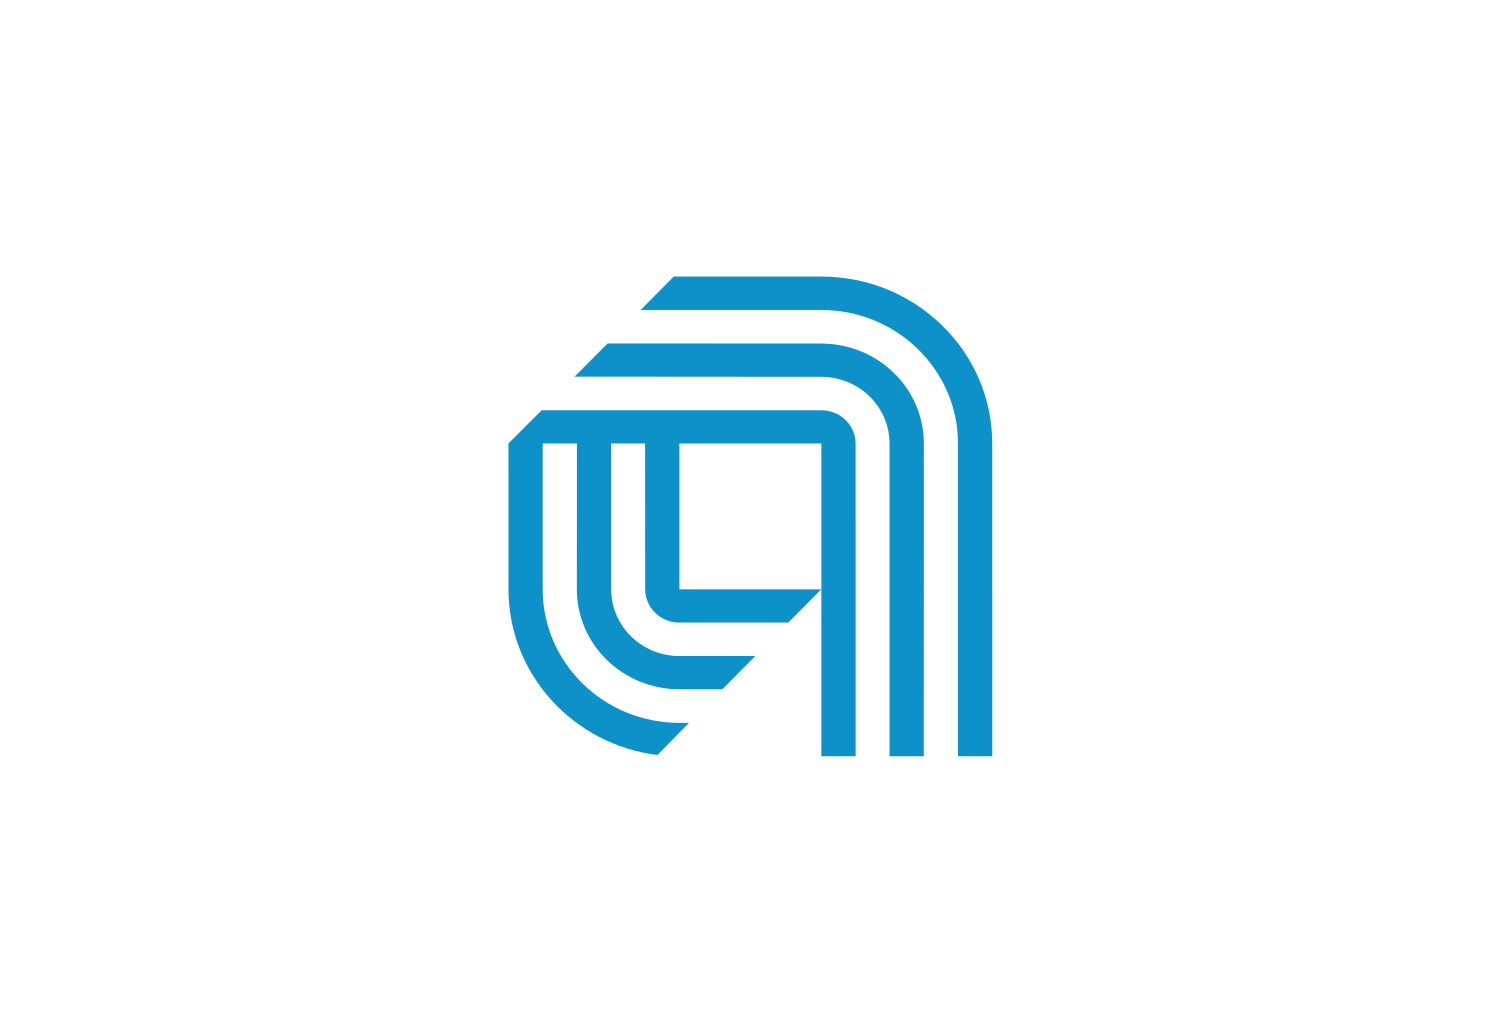 Amat Logo - Applied Materials logo | Dwglogo